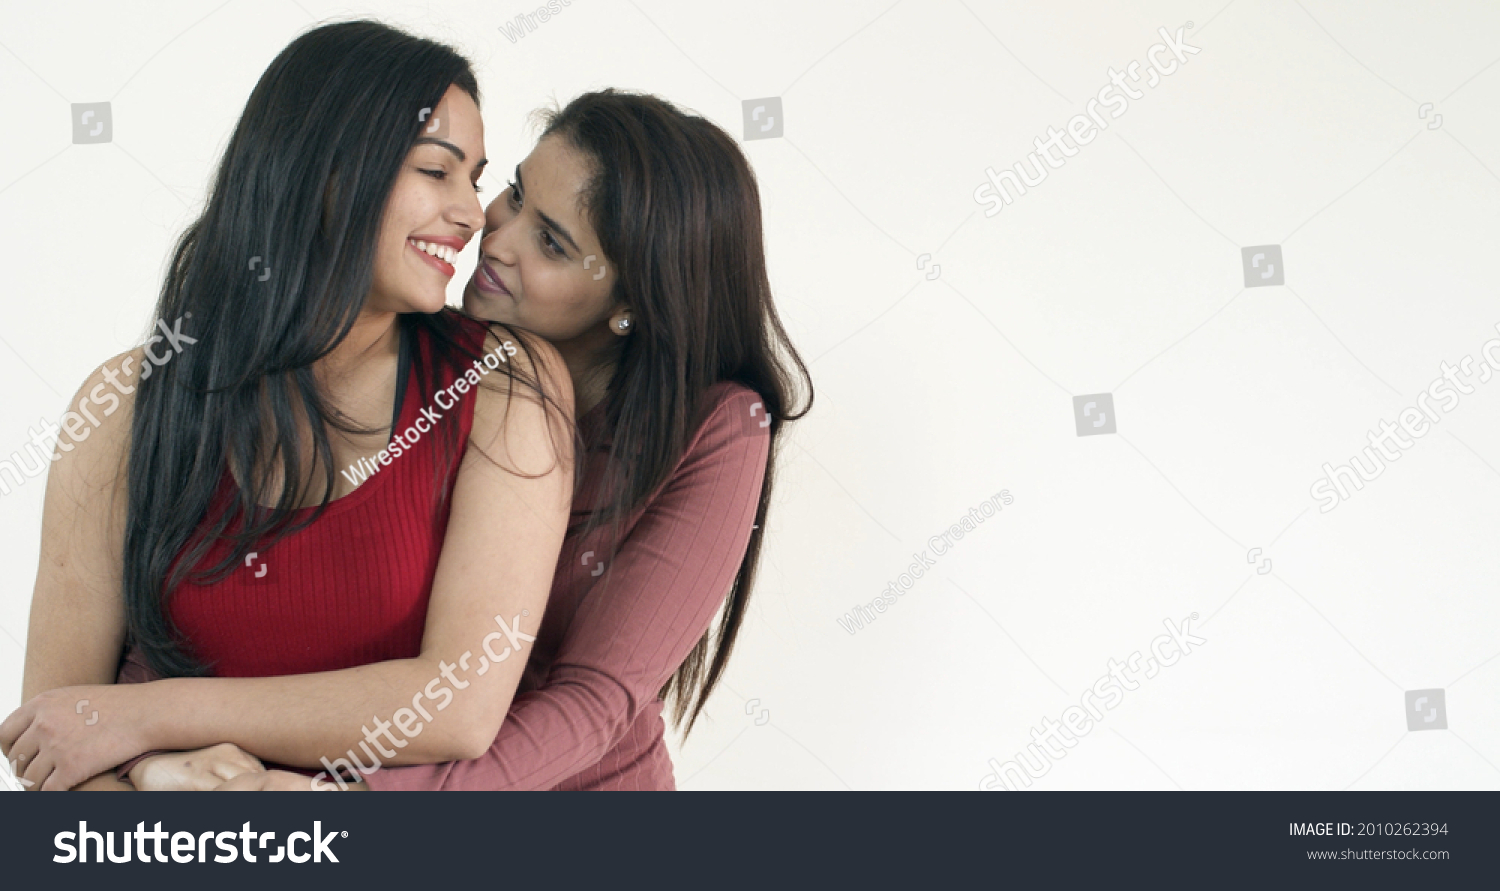 Indian Lesbian